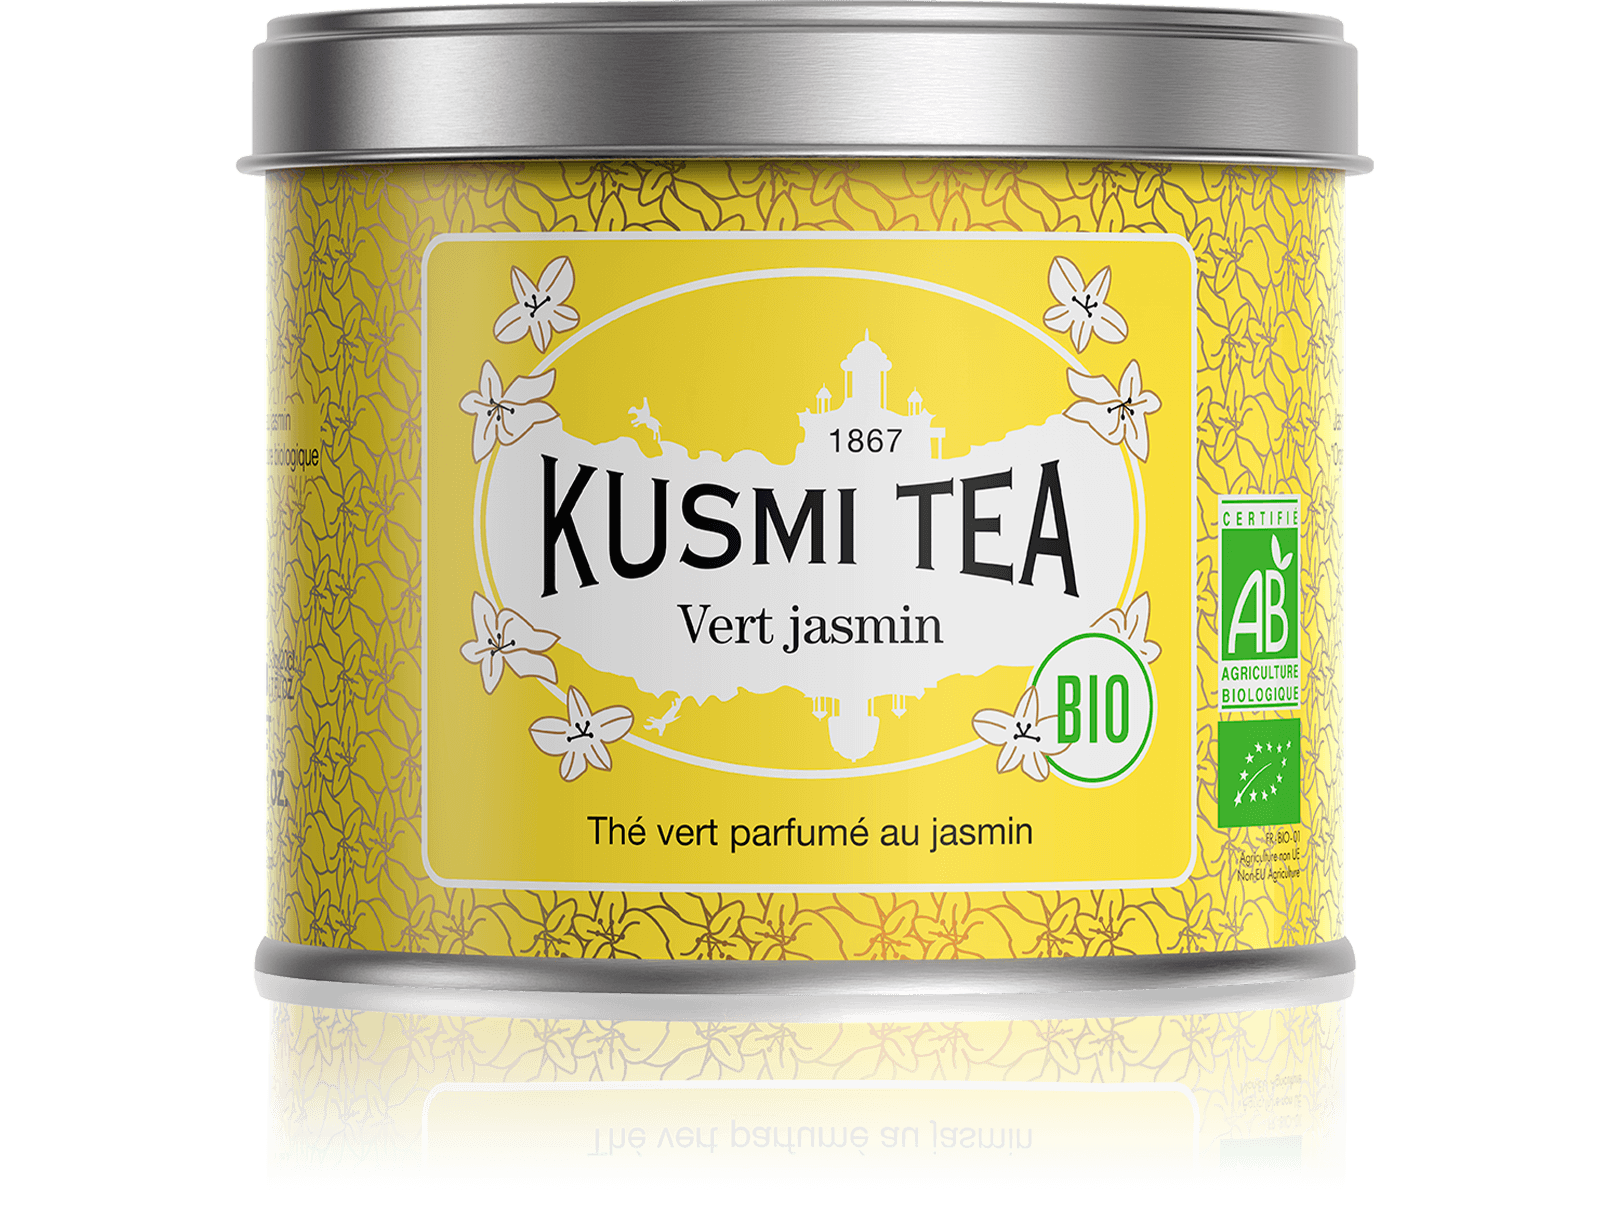 Green Jasmine (Organic) - Kusmi Tea